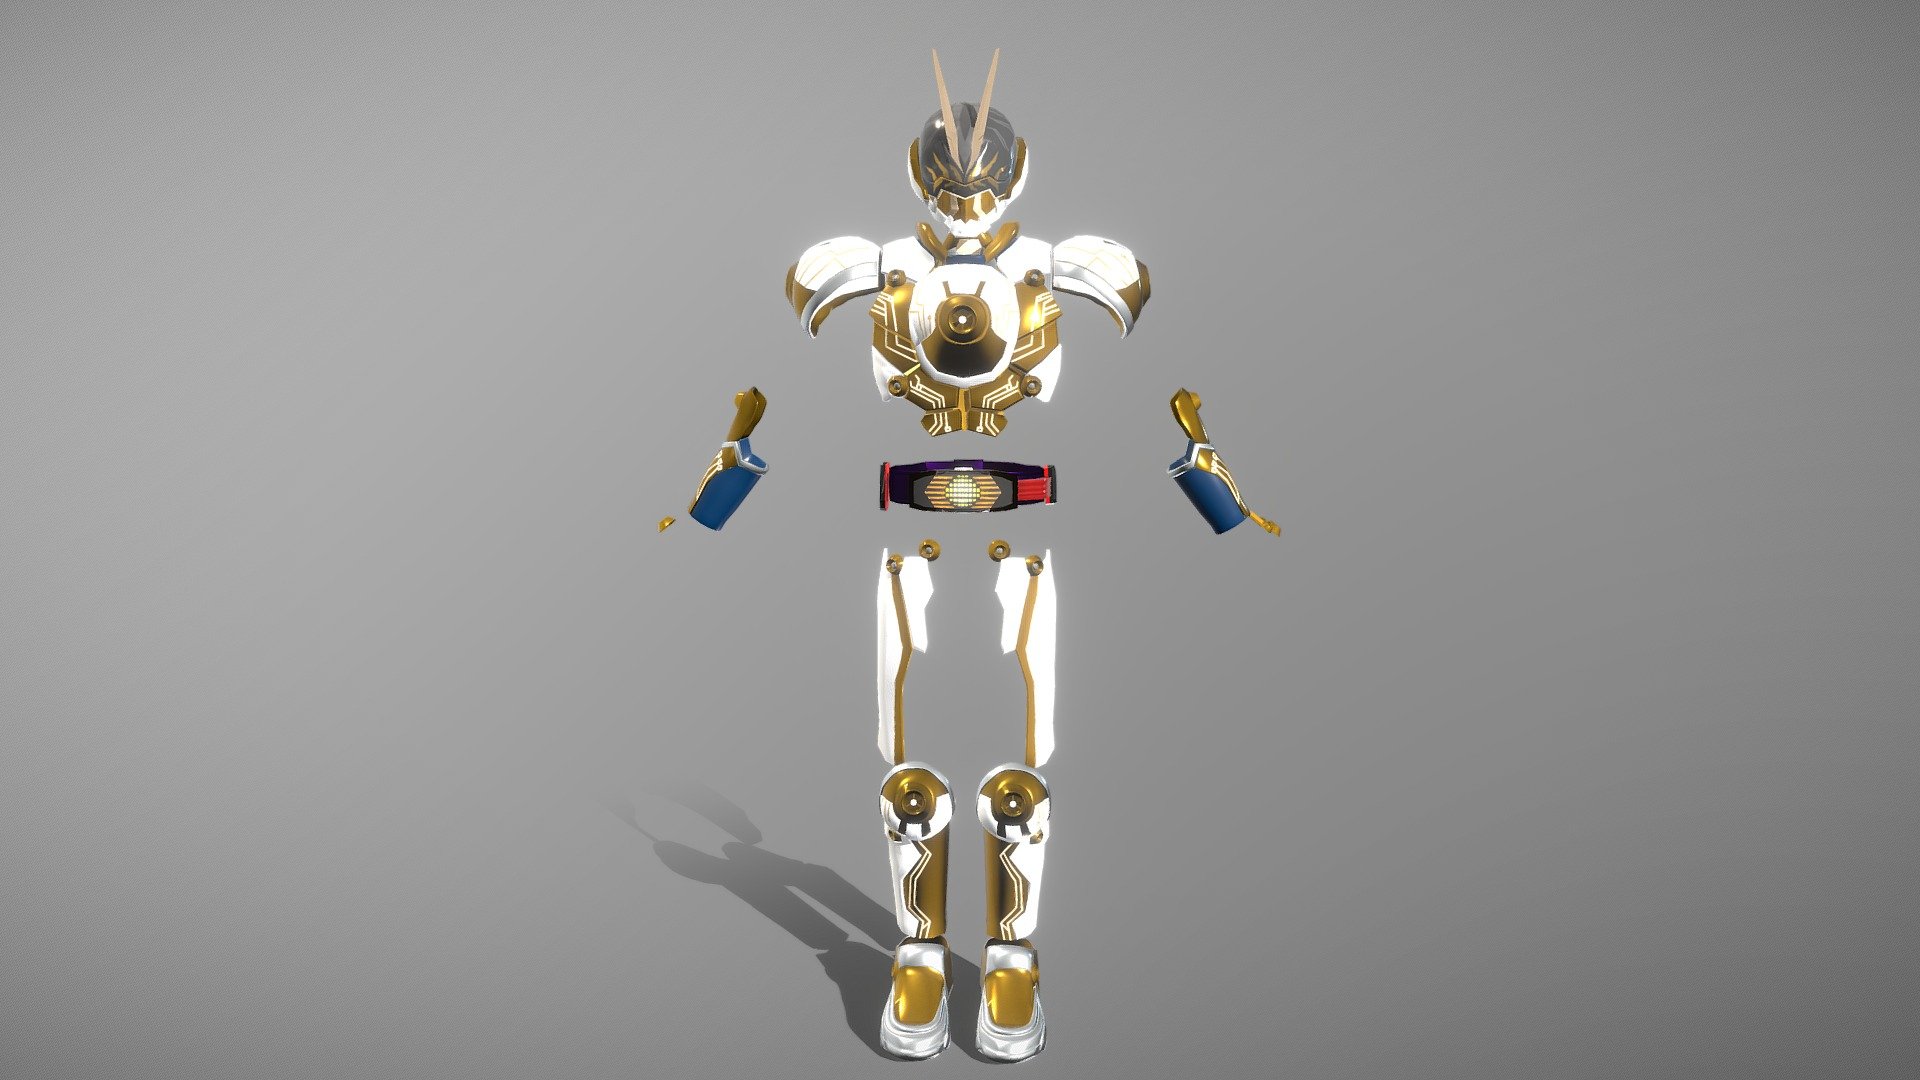 Kamen rider Gazer (armor) 
made in blender 2.91
Texturing in Substance - Kamen Rider Gazer (armor) - 3D model by Surya.W.A (@surya3dmodel) 3d model